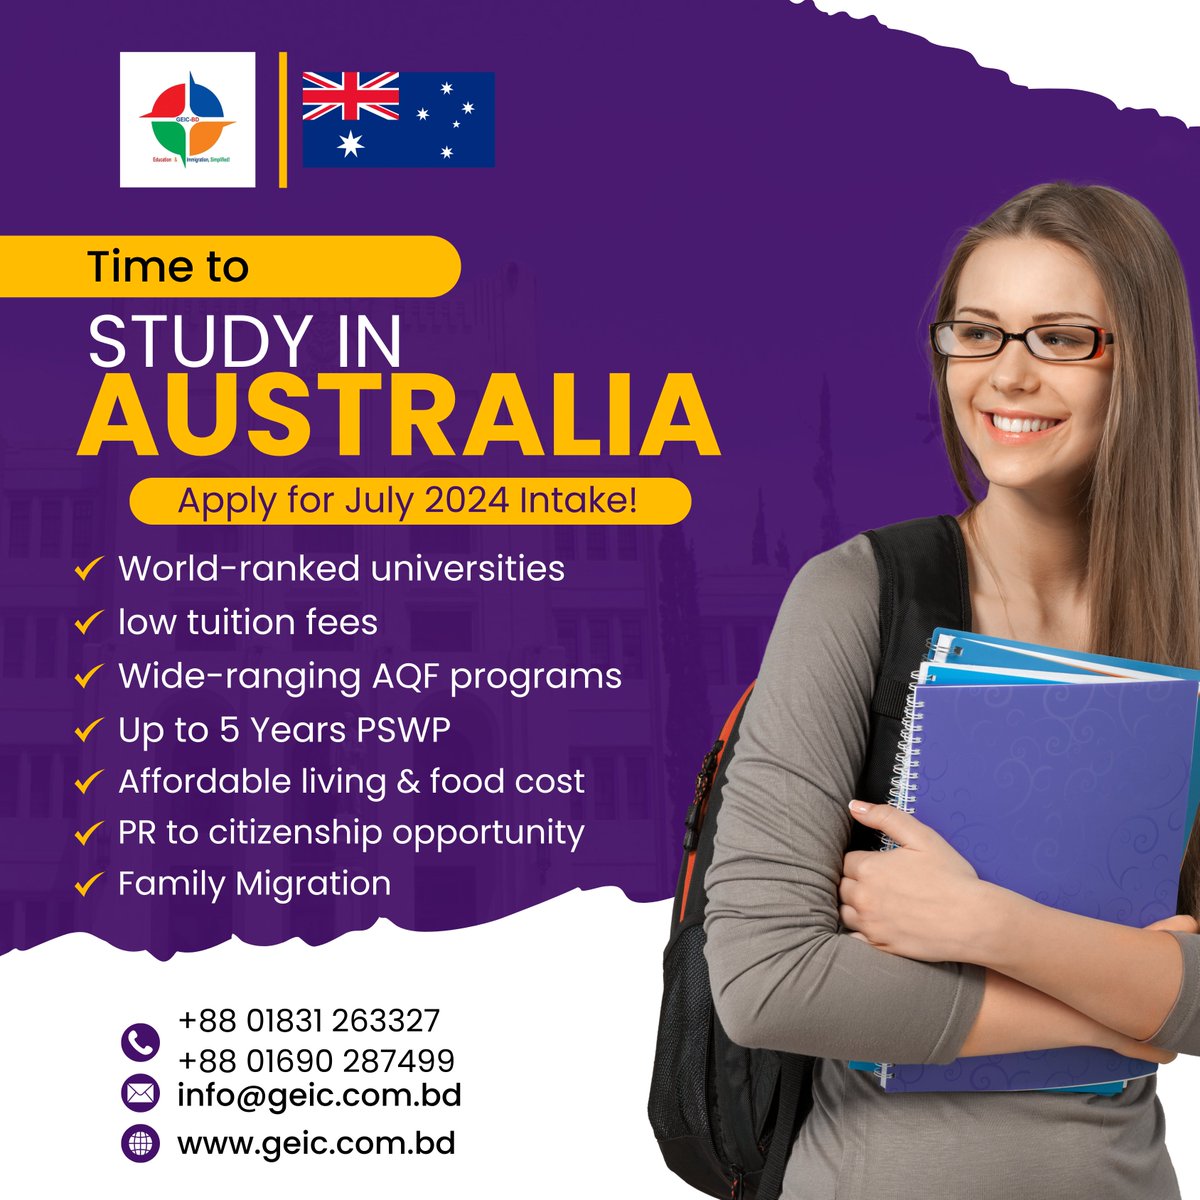 ' Make your Study Abroad dream come true '
' Study in Australia '
#studyaboard #studyabroad #studyaustralia #studyaesthetic #studyabroadlife #studyarchitecture #StudyAbroadJourney
#studyabroadconsultants